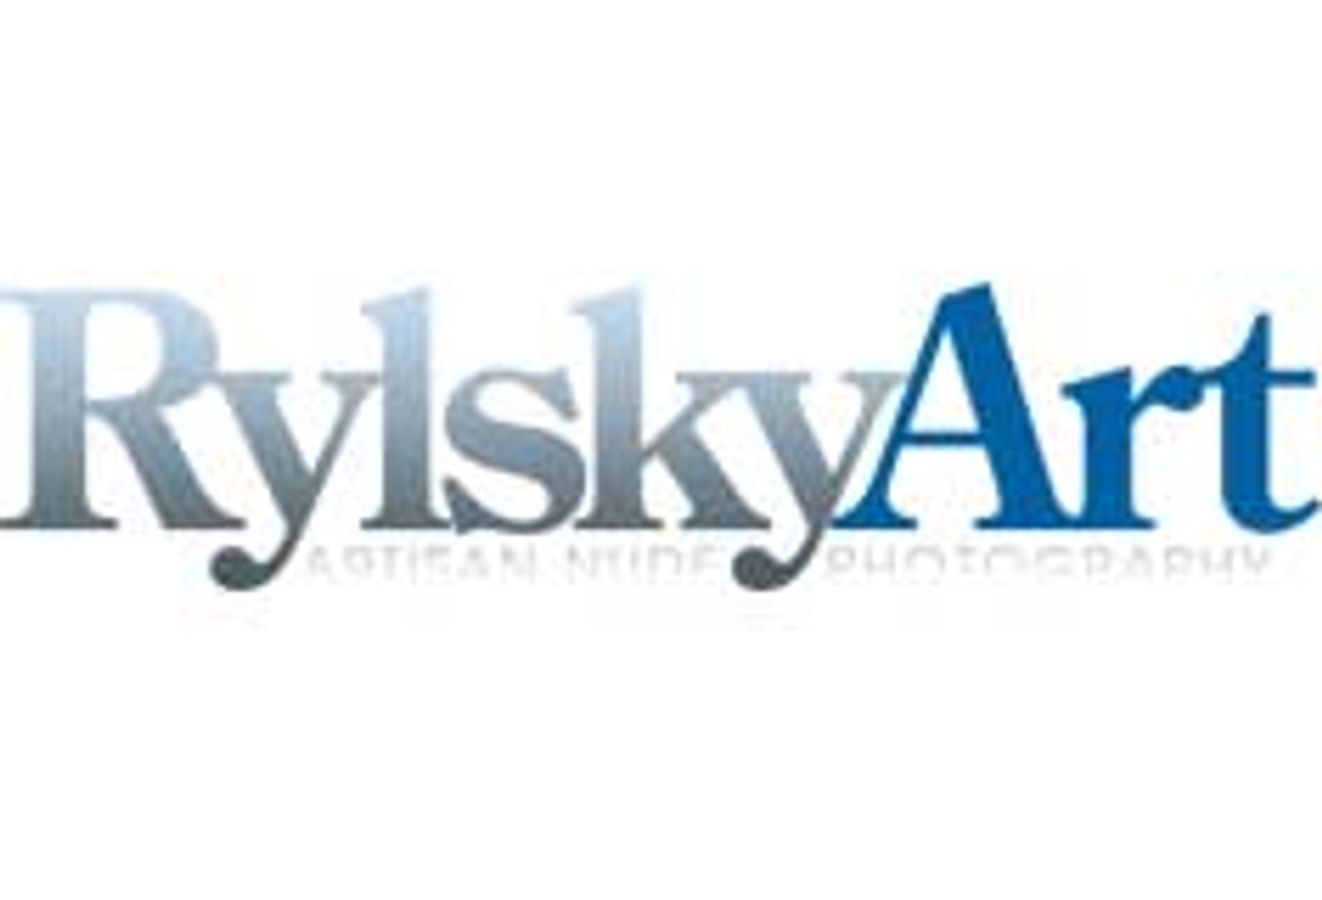 RylskyArt.com